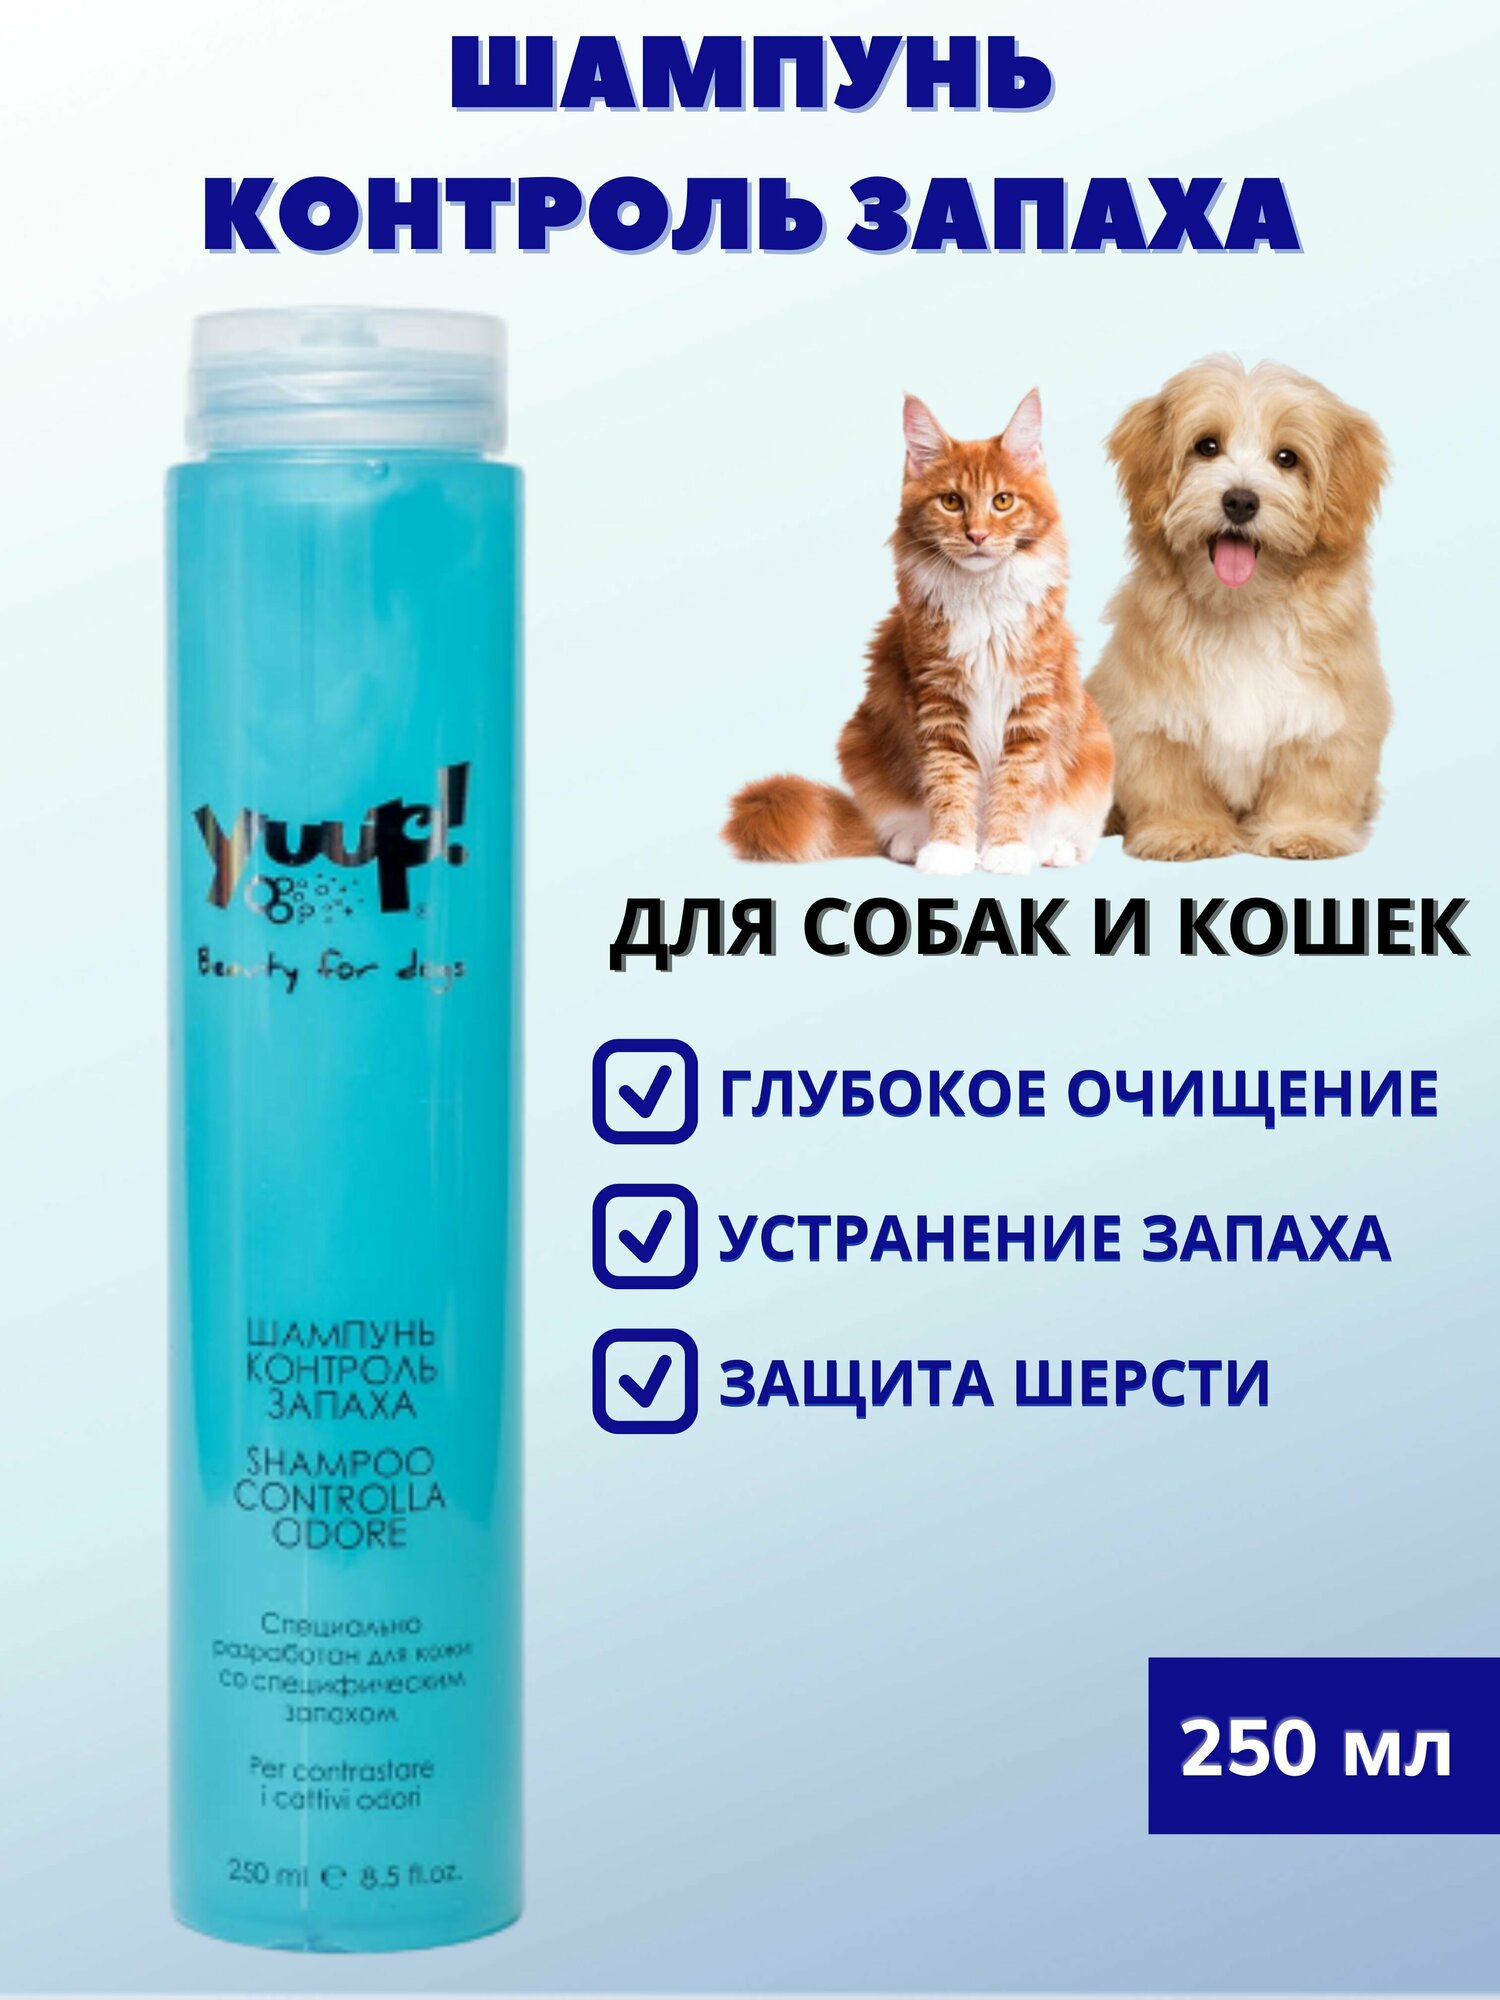 Yuup Шампунь для животных Контроль запаха, 250мл - фото №3